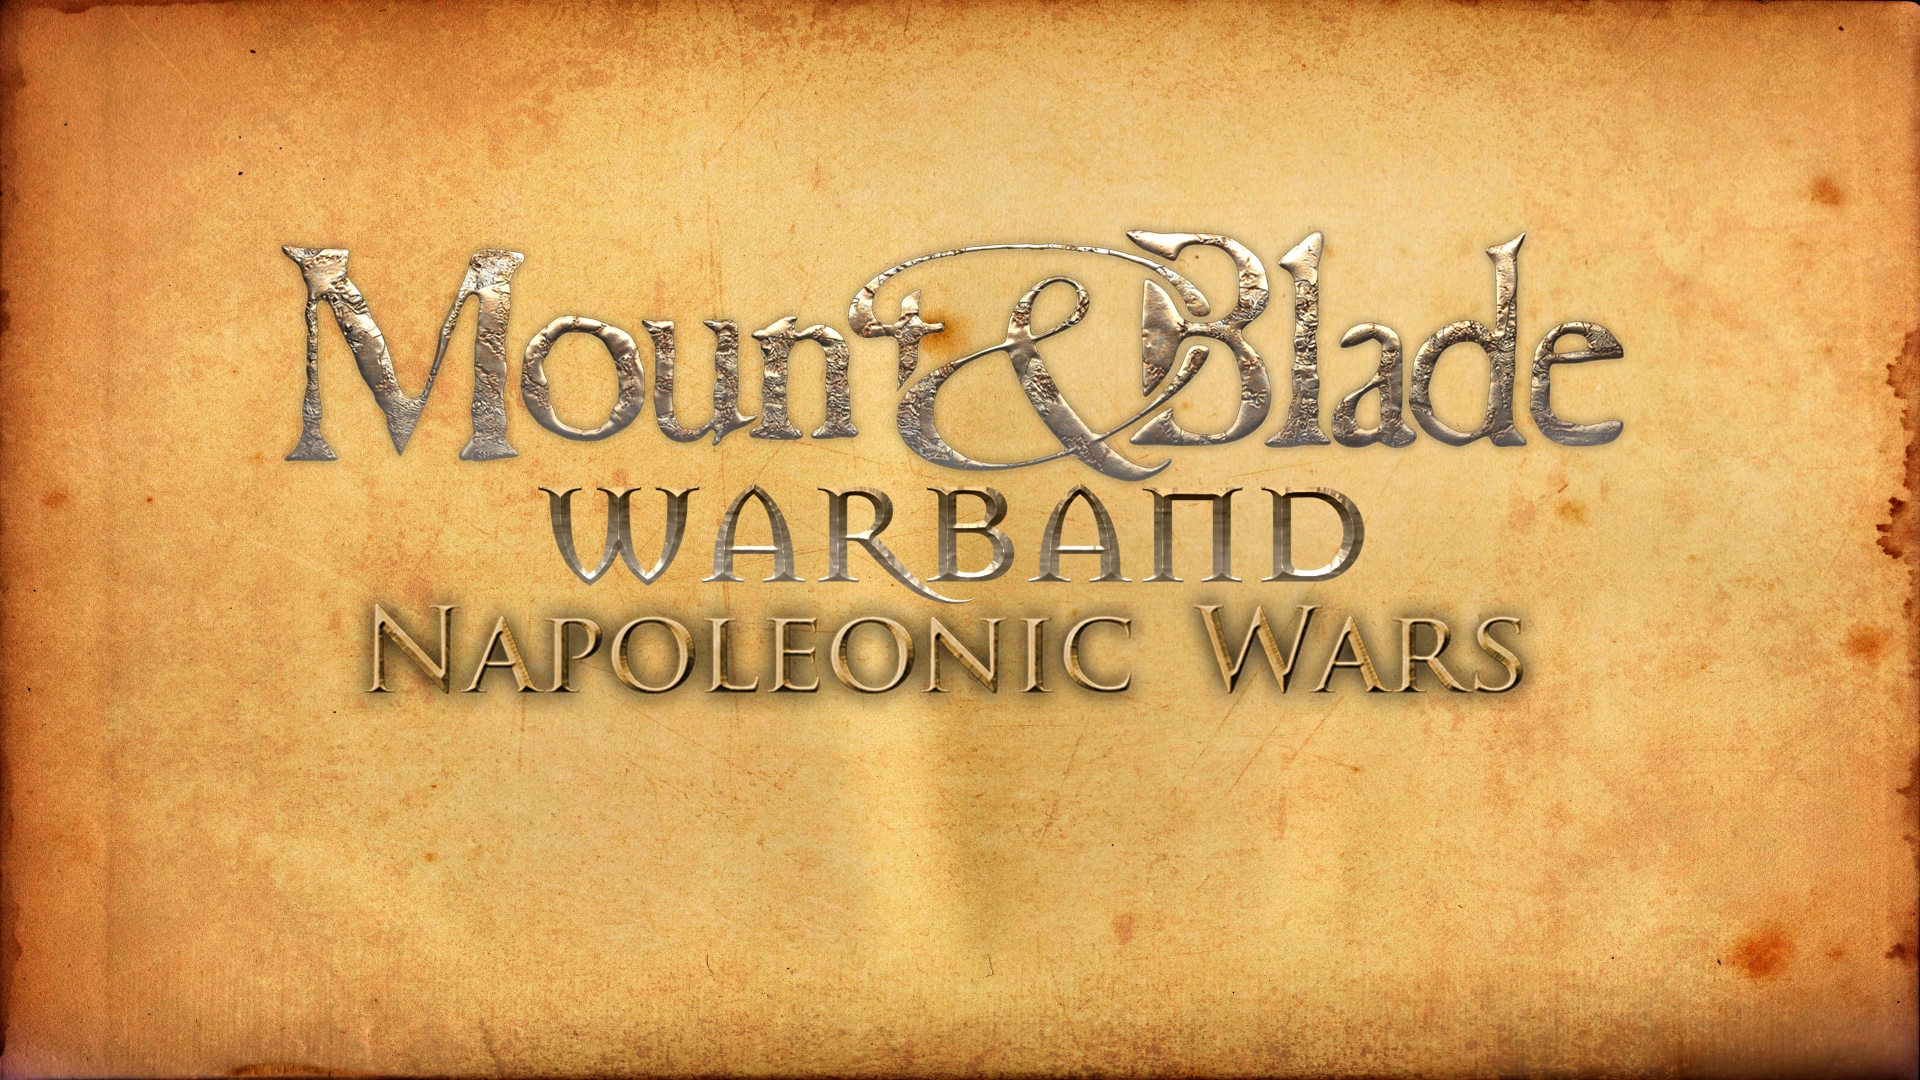 Mount and blade napoleonic wars gameplay